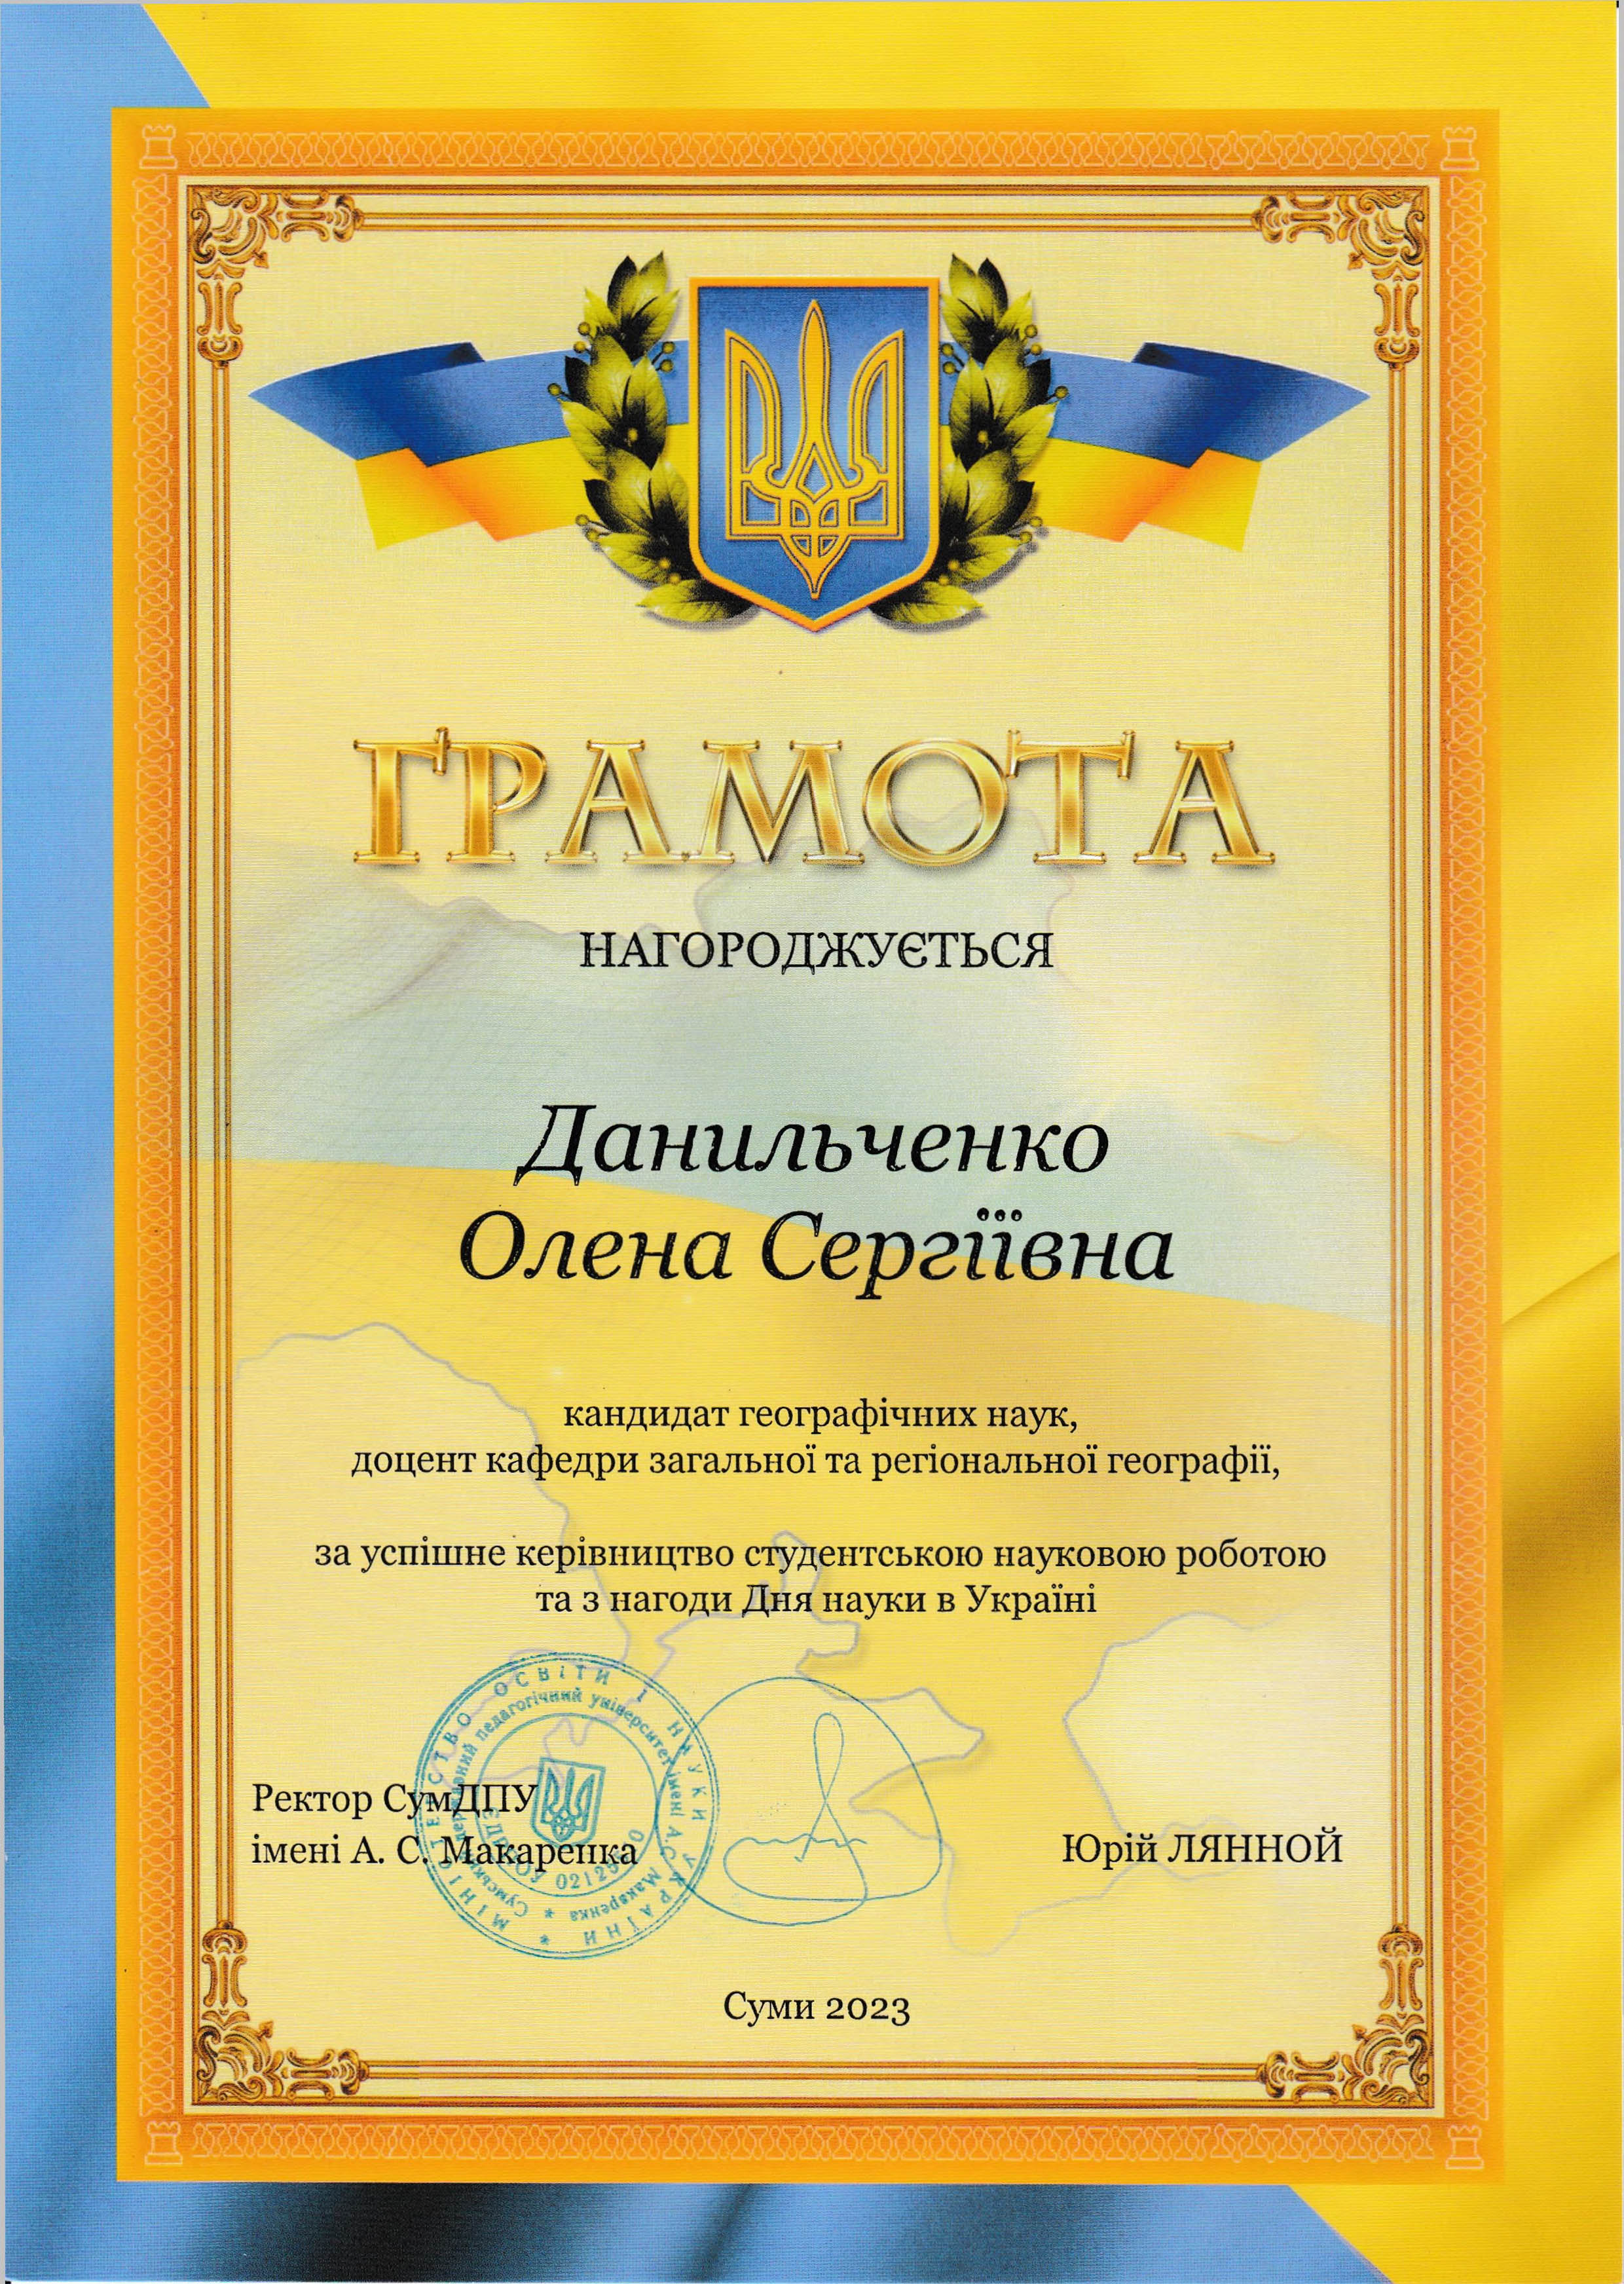 diplom danilchenko 481f2